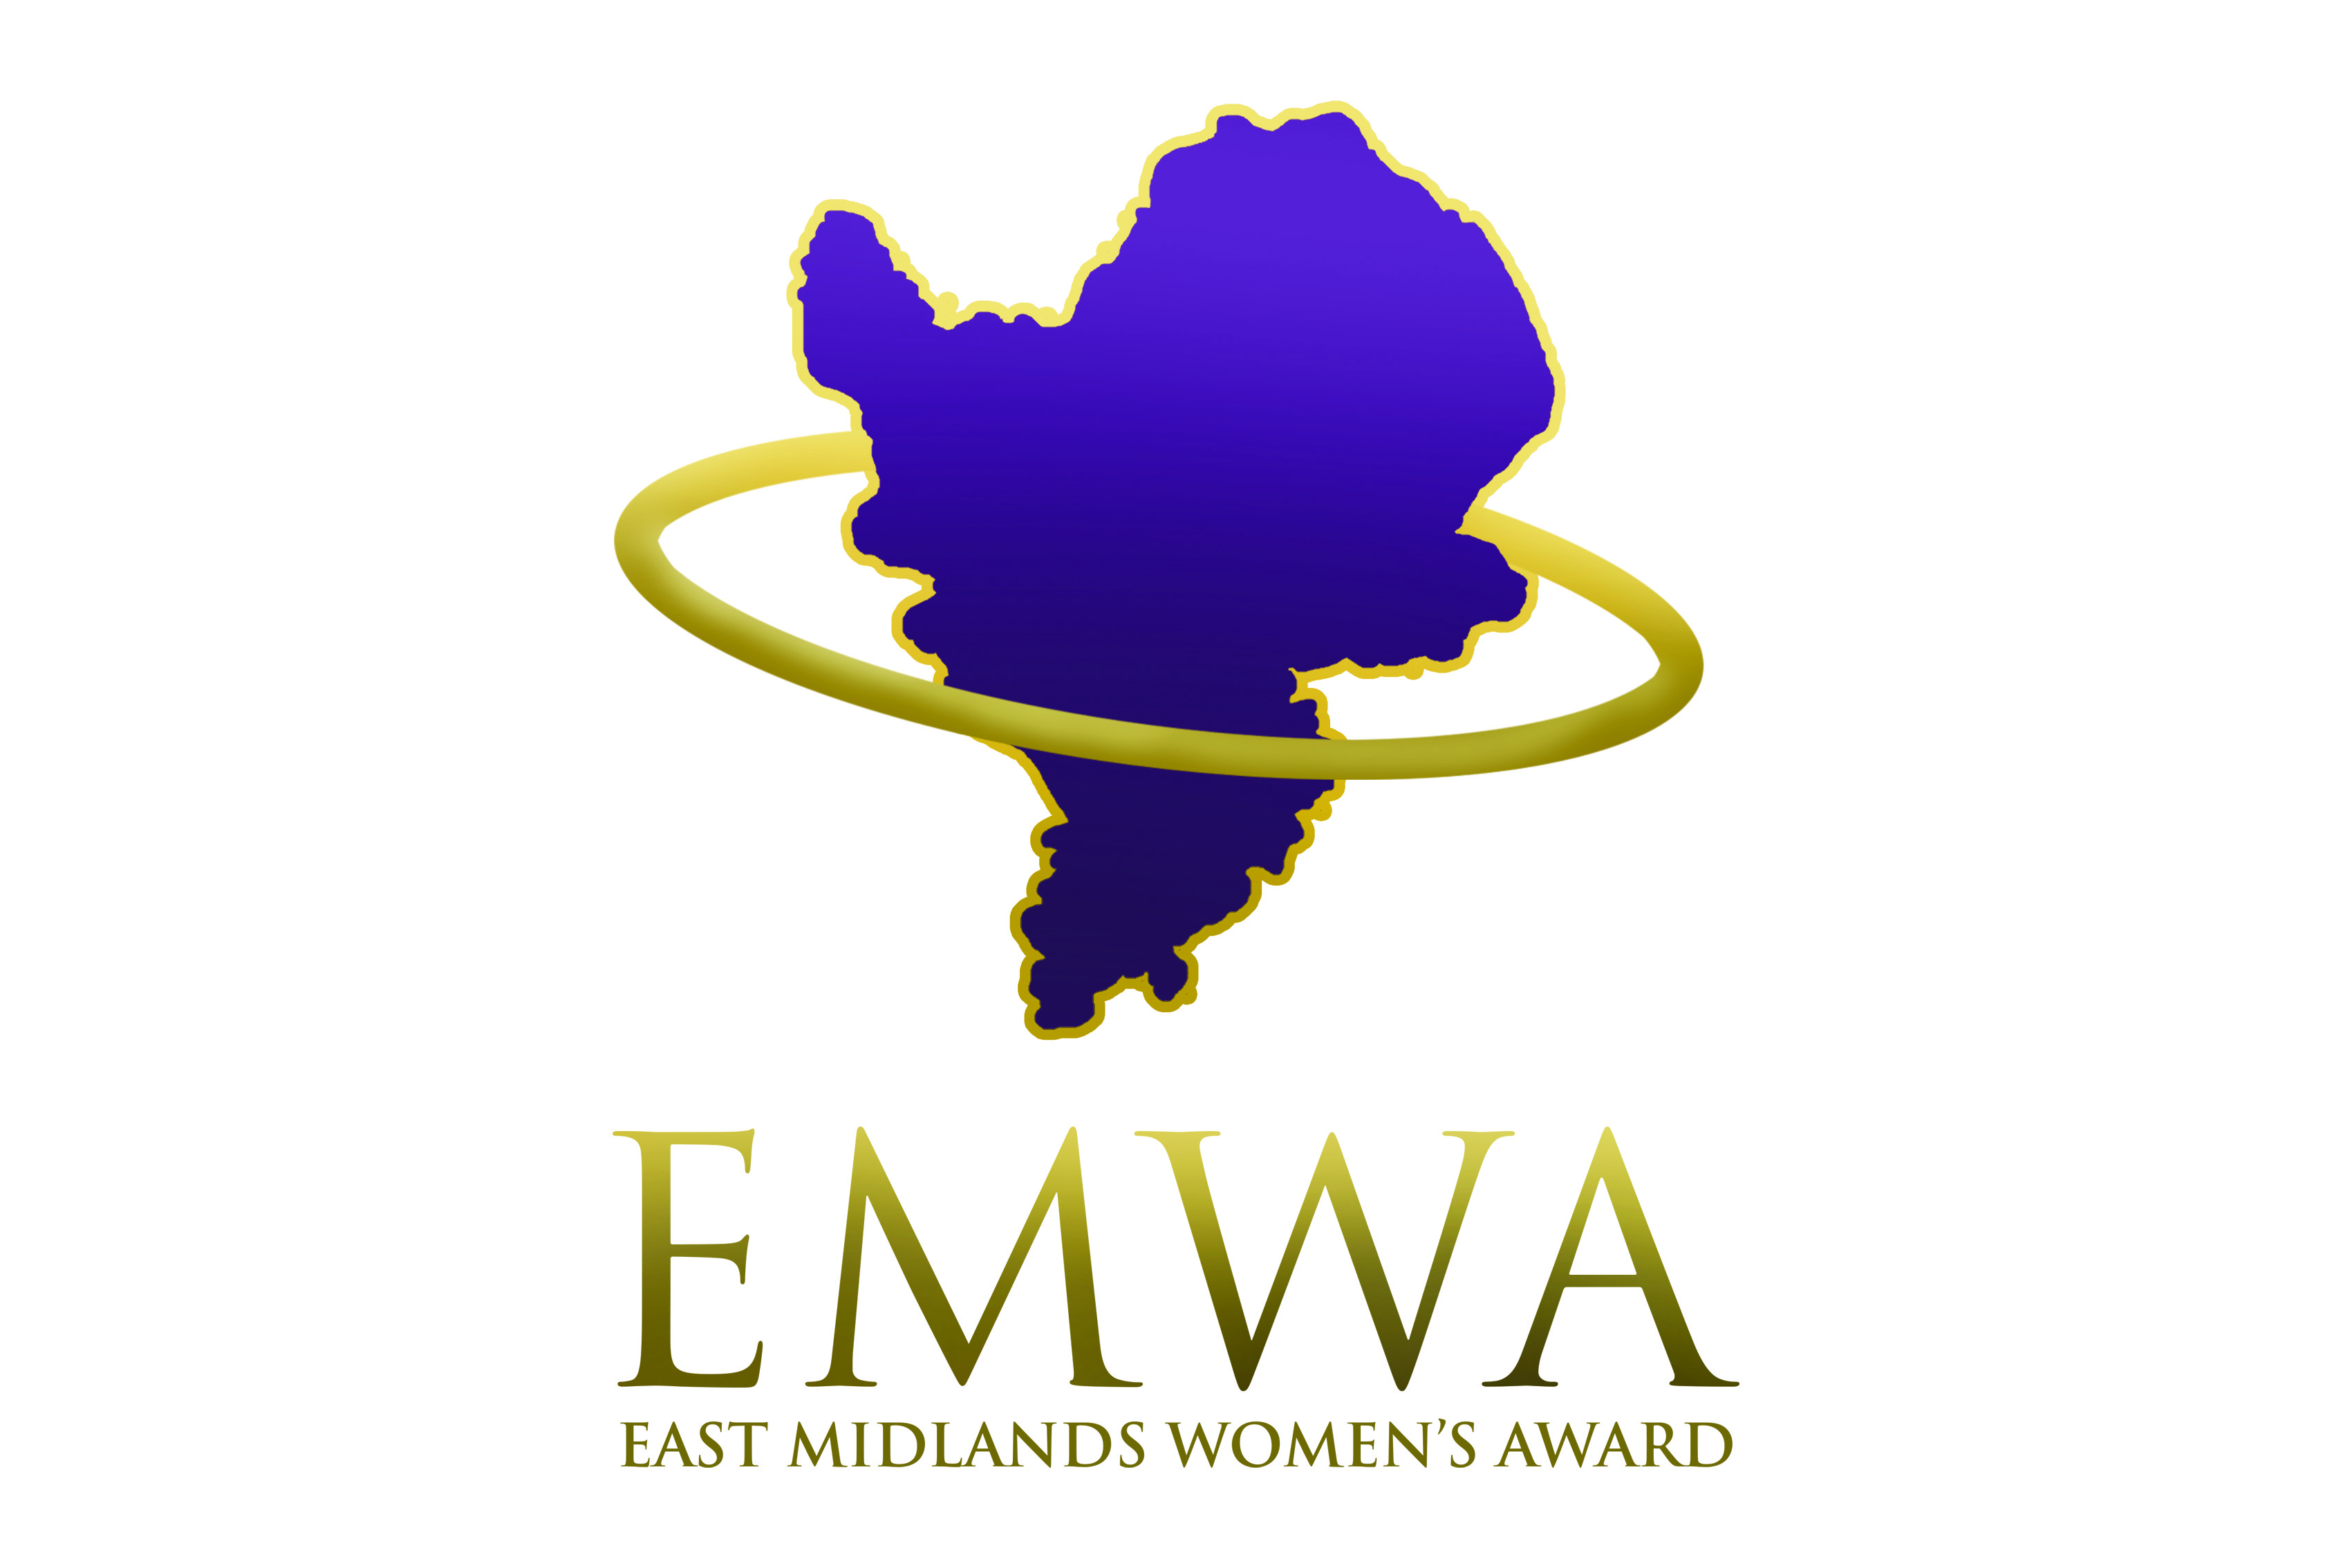 East Midlands Womens Awards